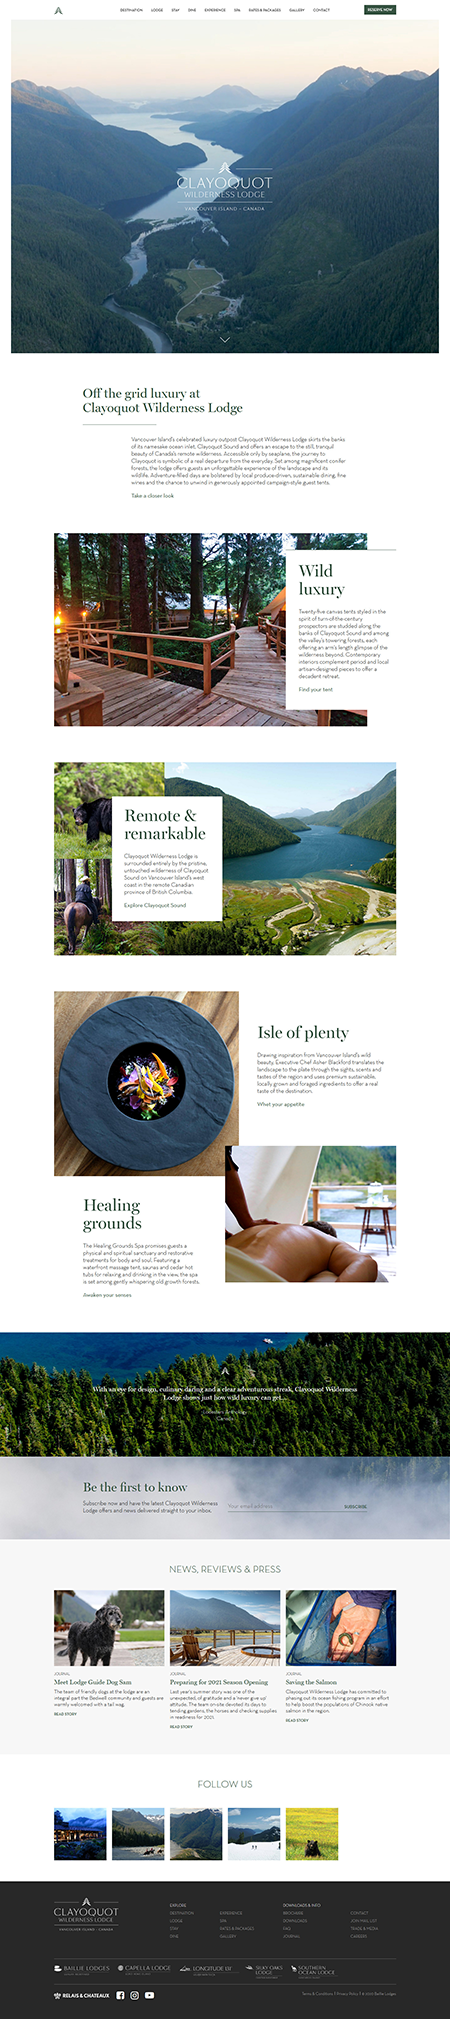 Clayoquot Wilderness Lodge - Web Design Case Study